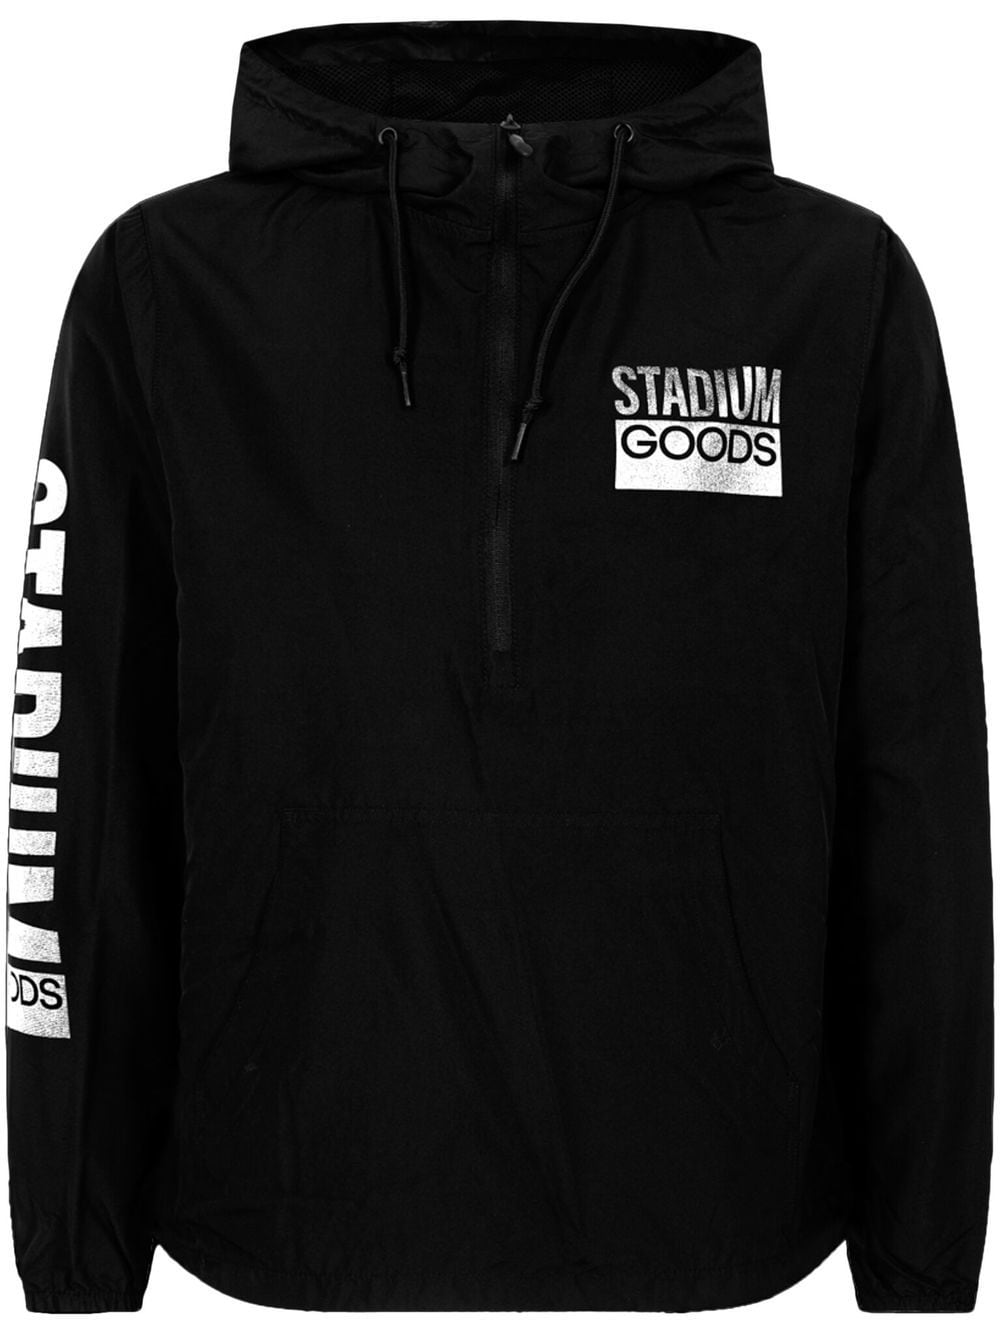 STADIUM GOODS® logo-print "Black/Reflective" windbreaker von STADIUM GOODS®